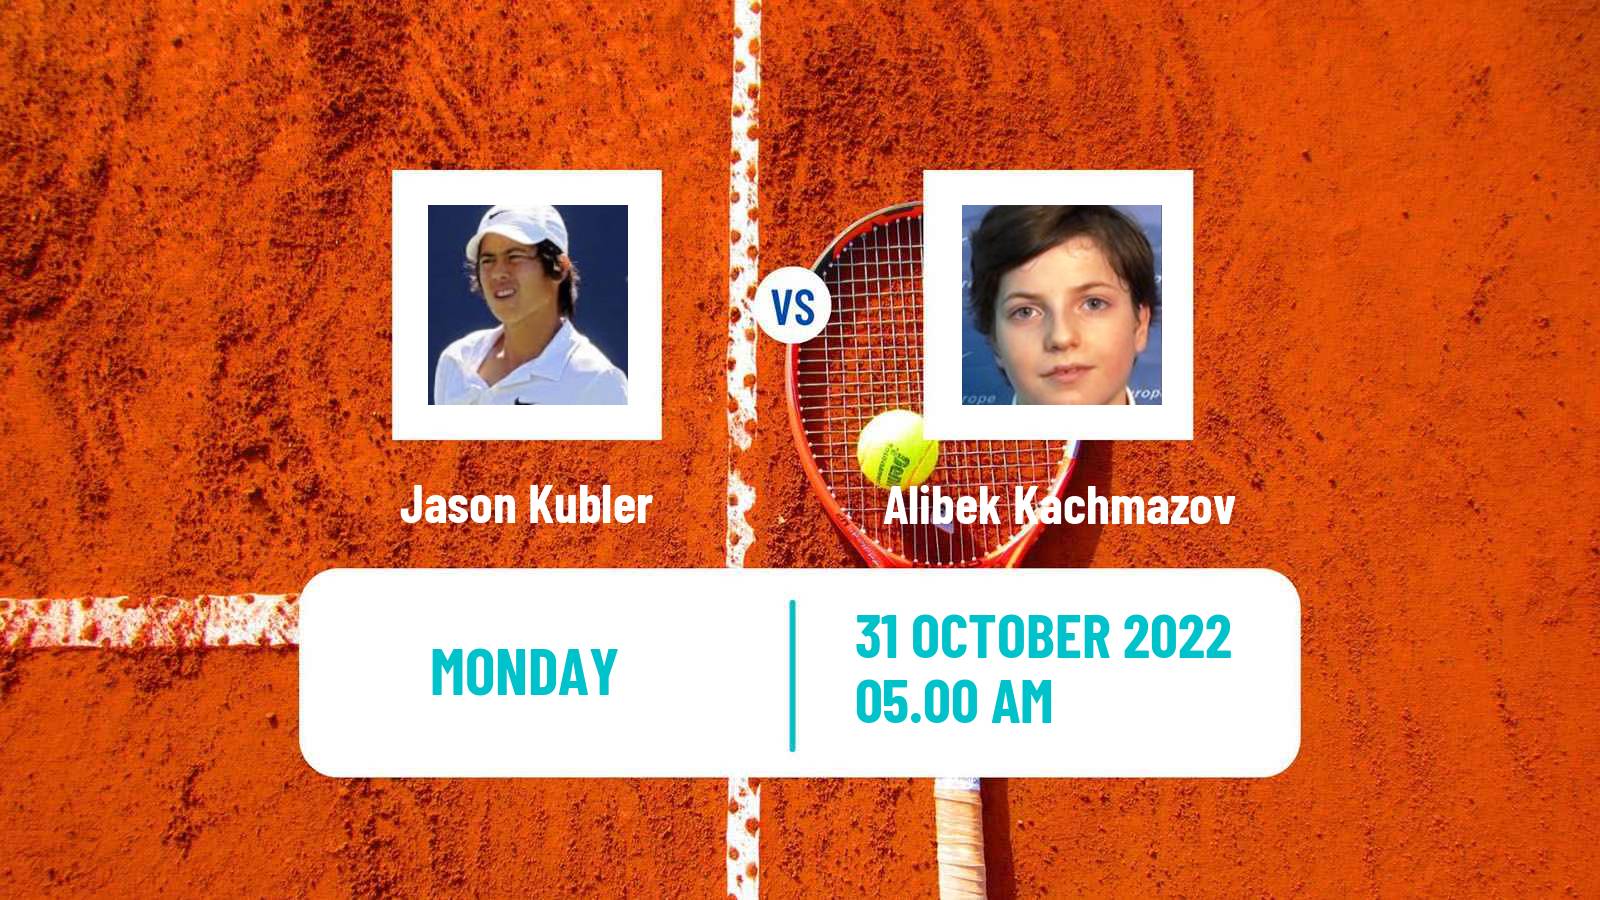 Tennis ATP Challenger Jason Kubler - Alibek Kachmazov